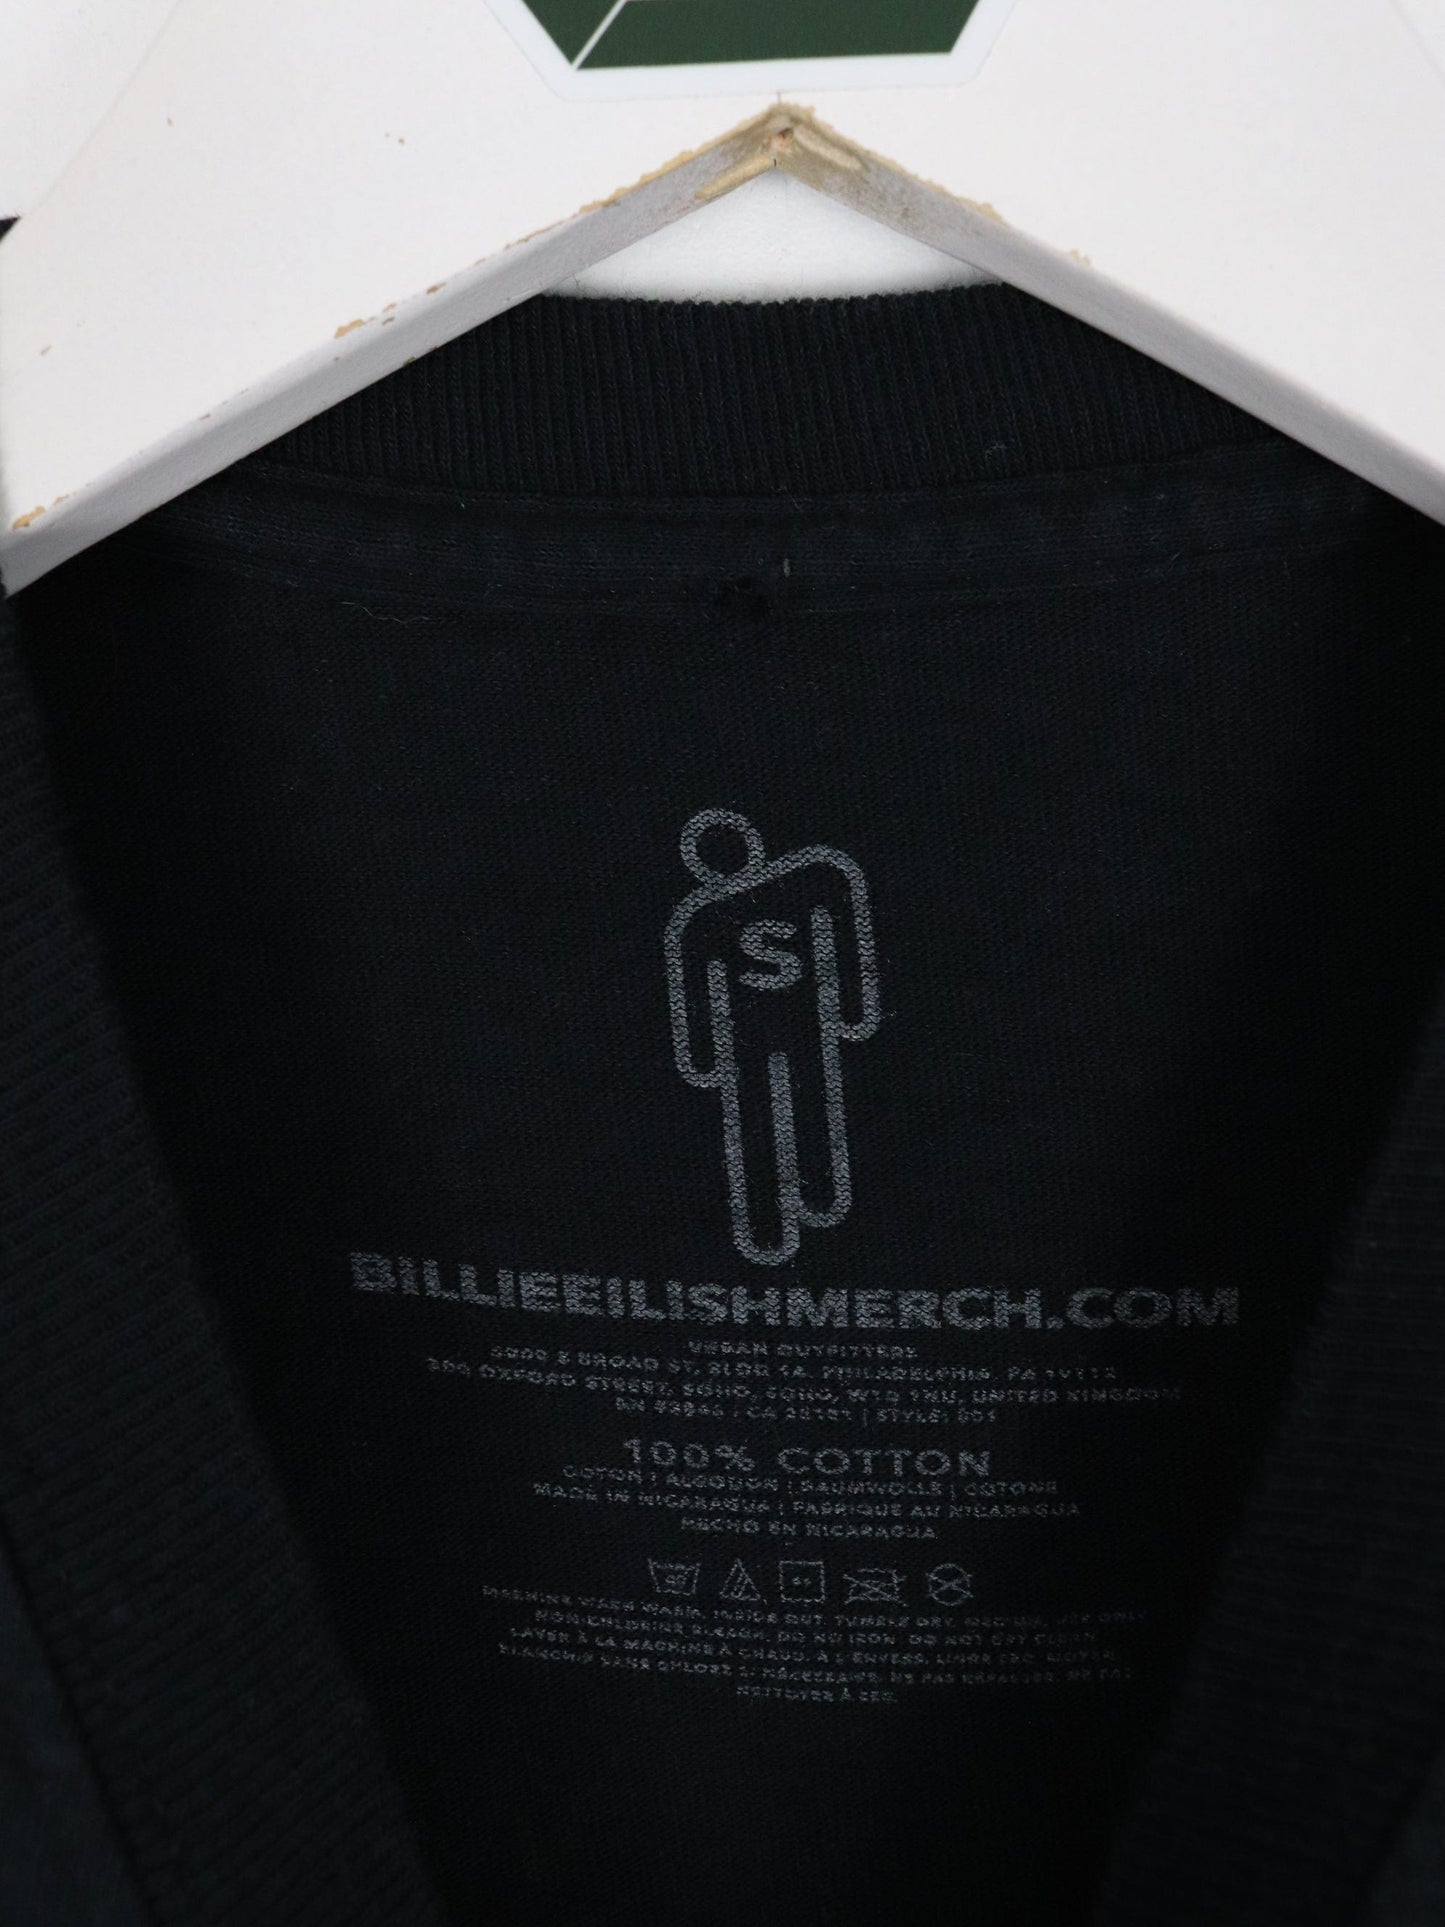 Other T-Shirts & Tank Tops Billie Eilish T Shirt Mens Small Black Music Tour Concert